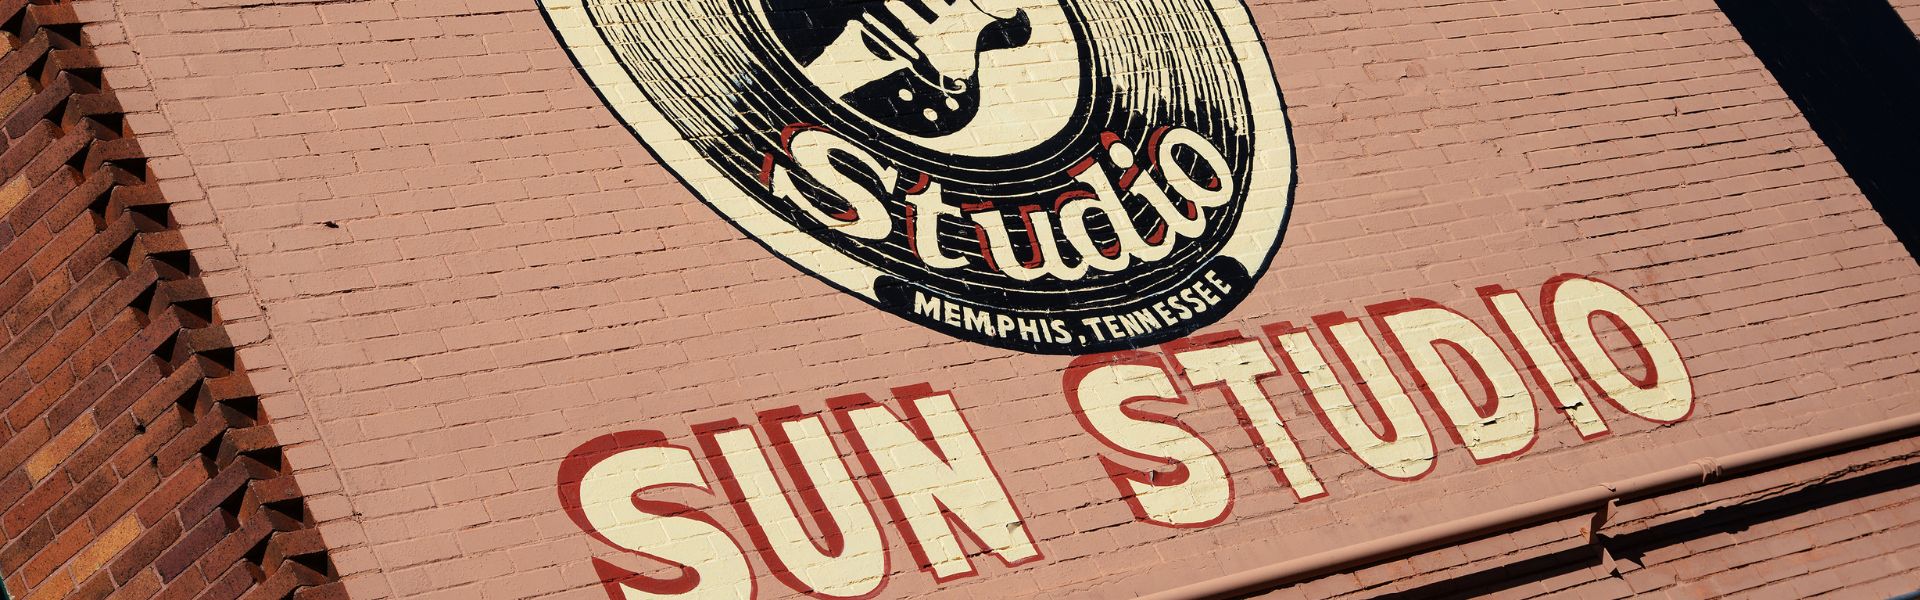 Sun Studios Memphis Tennessee Tourism 02Dec22